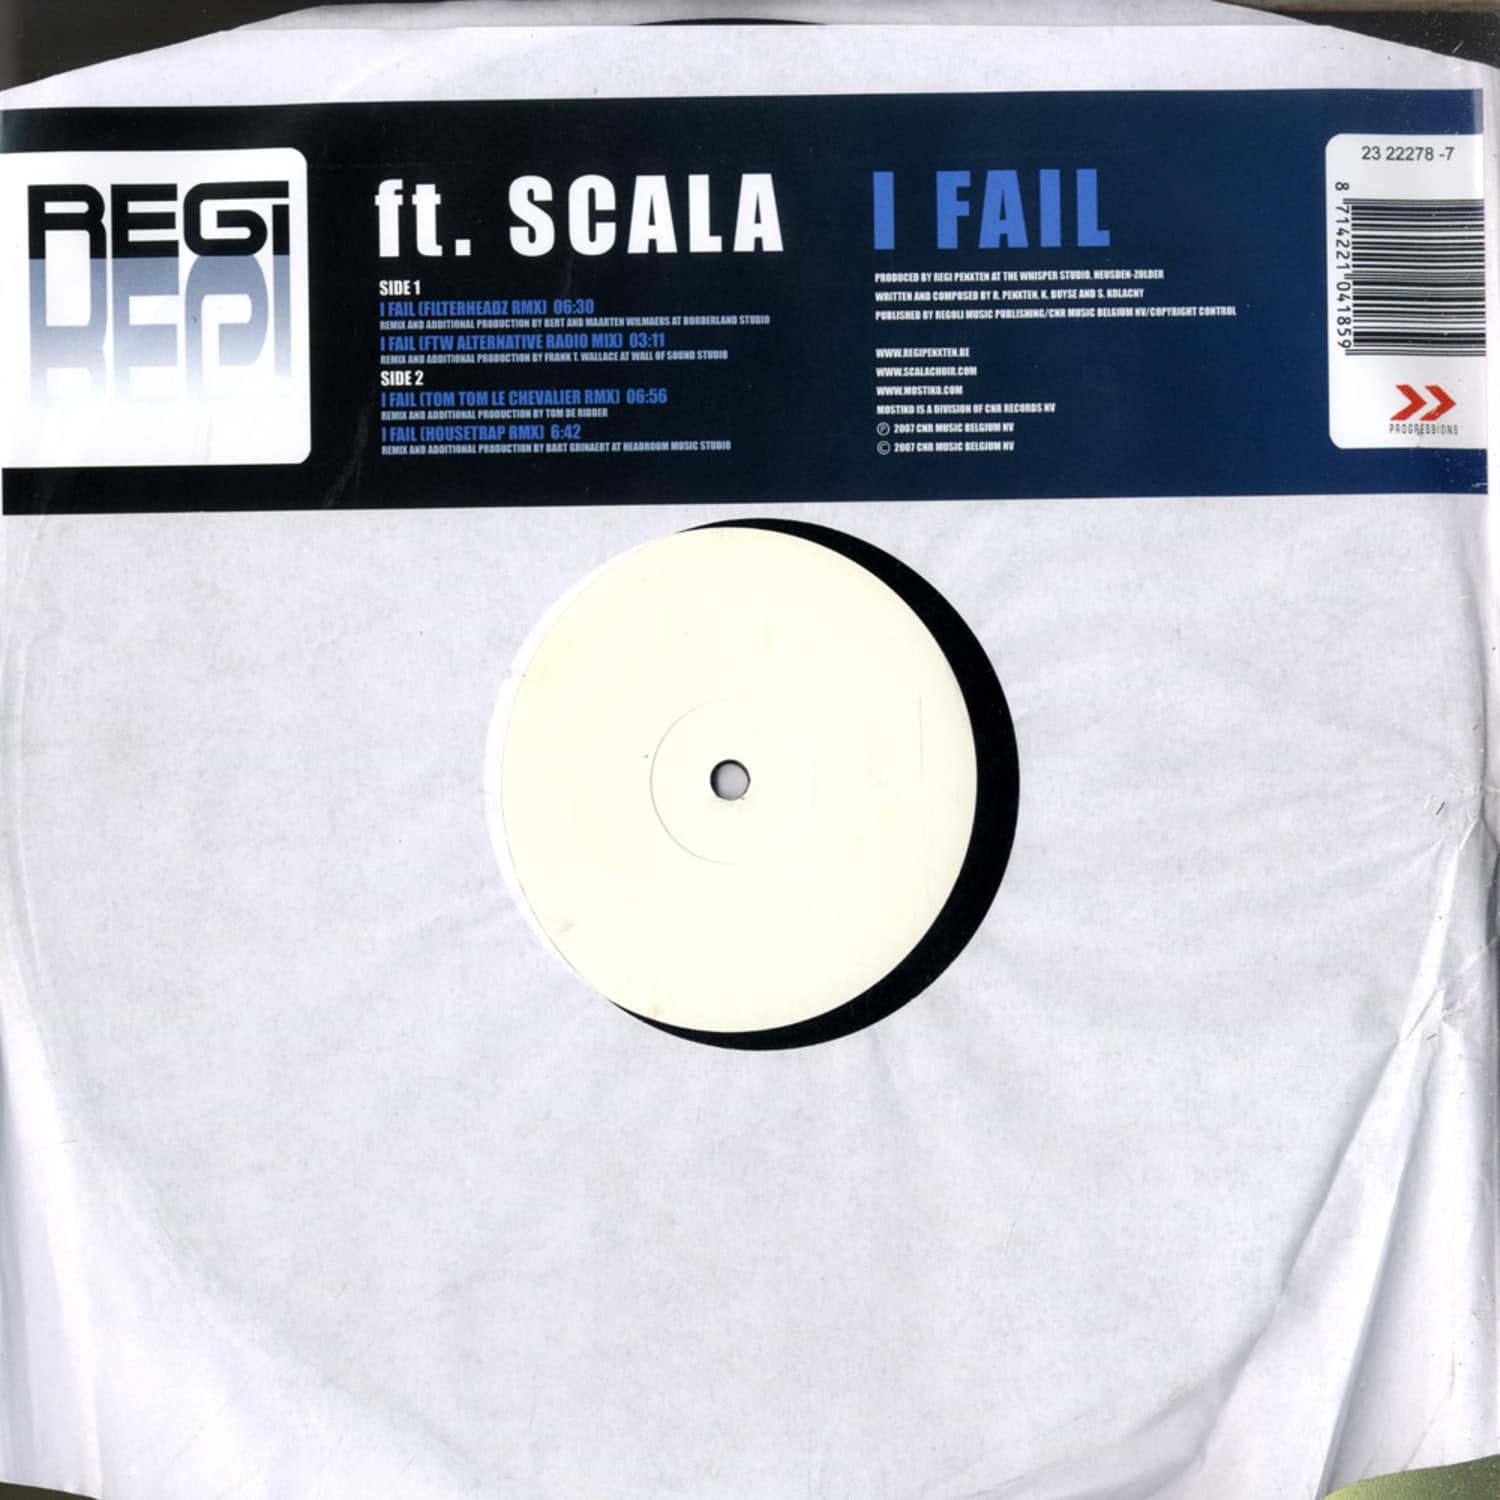 Regi Ft. Scala - I FAIL